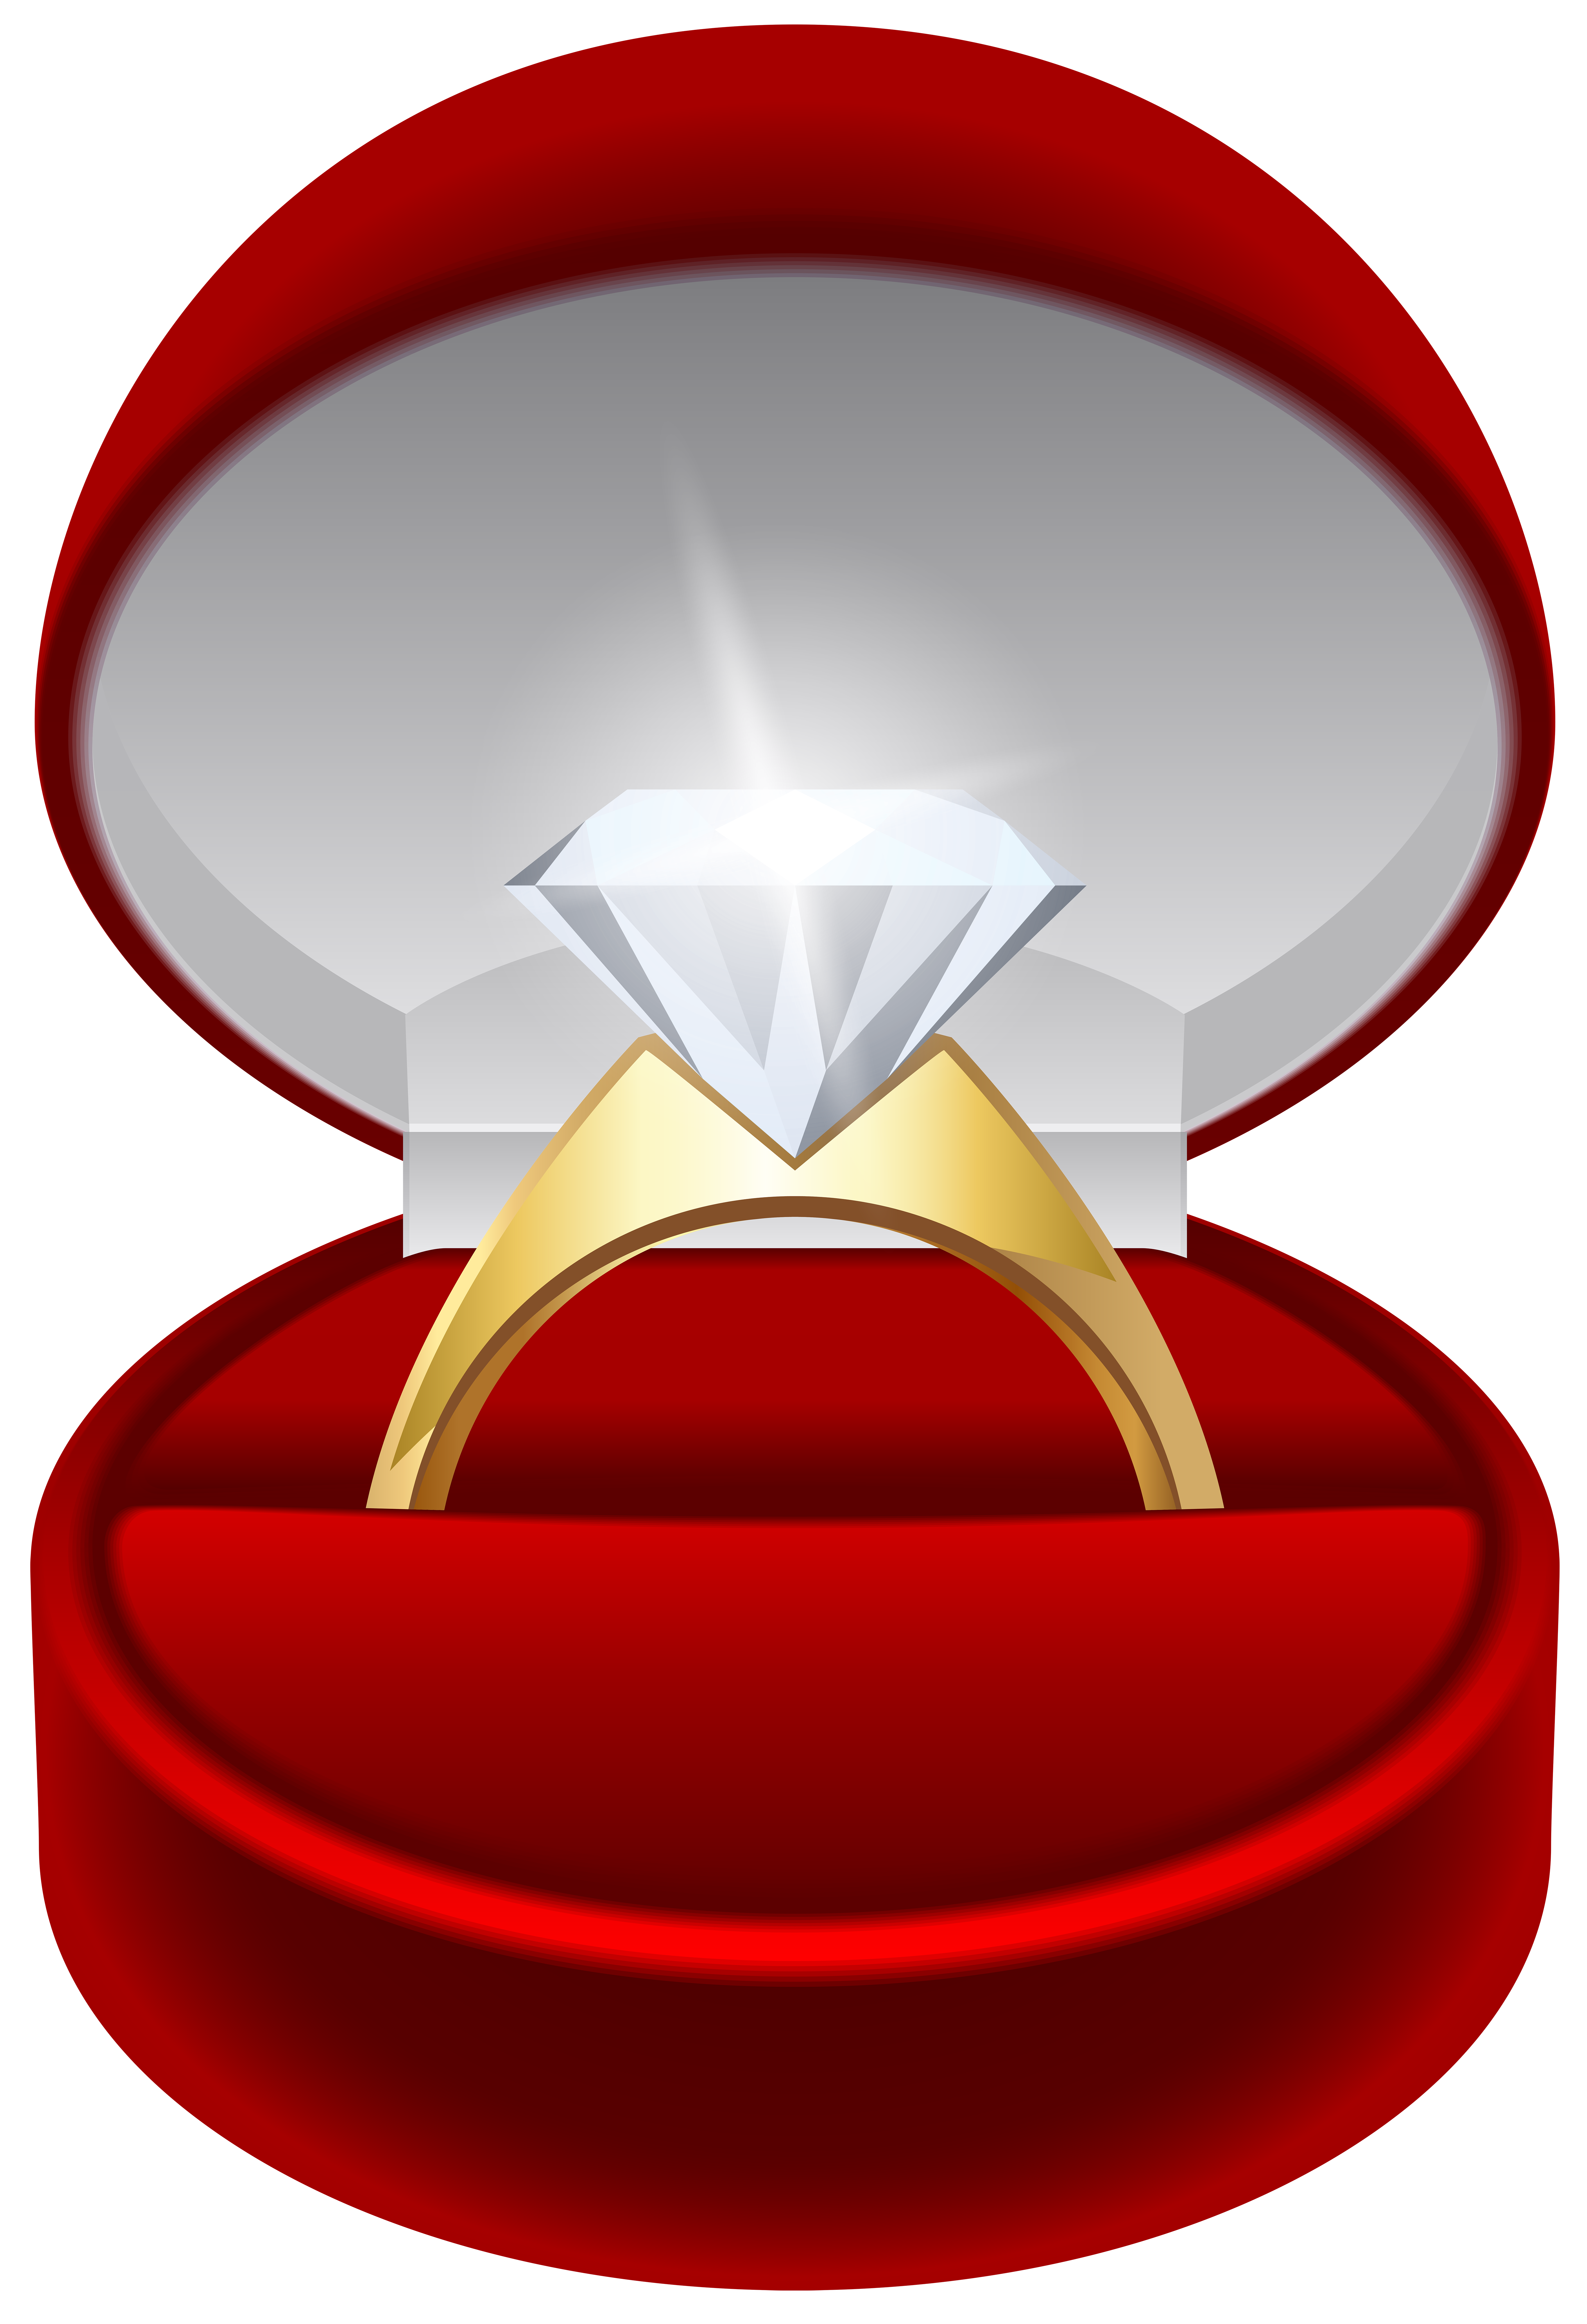 Engagement ring transparent clip art image